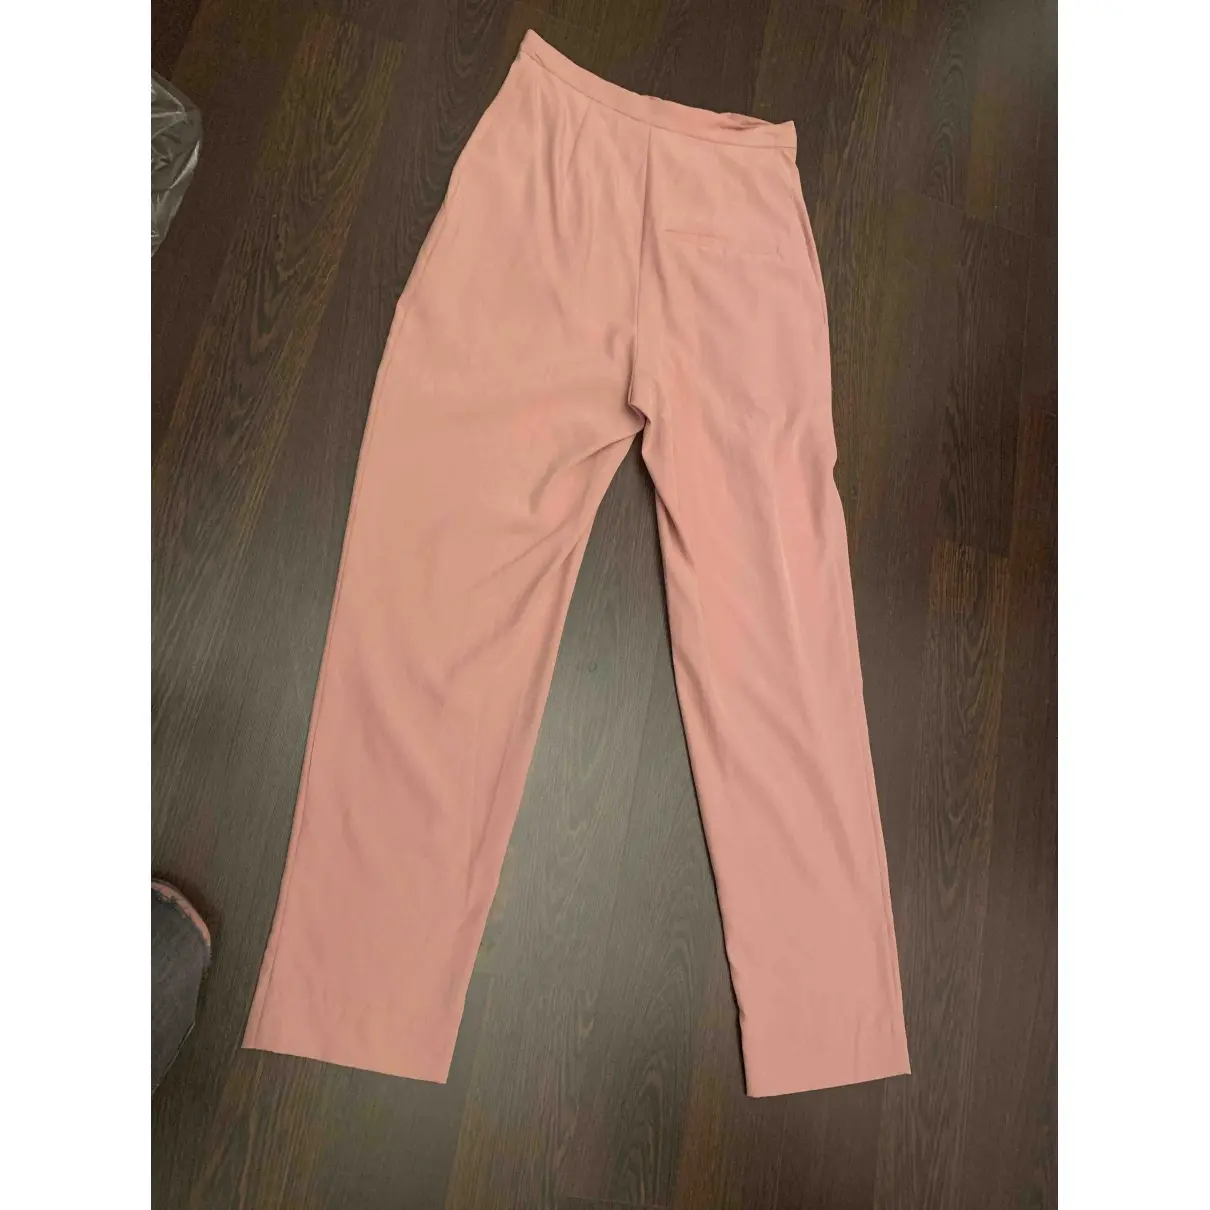 Nanushka Straight pants for sale